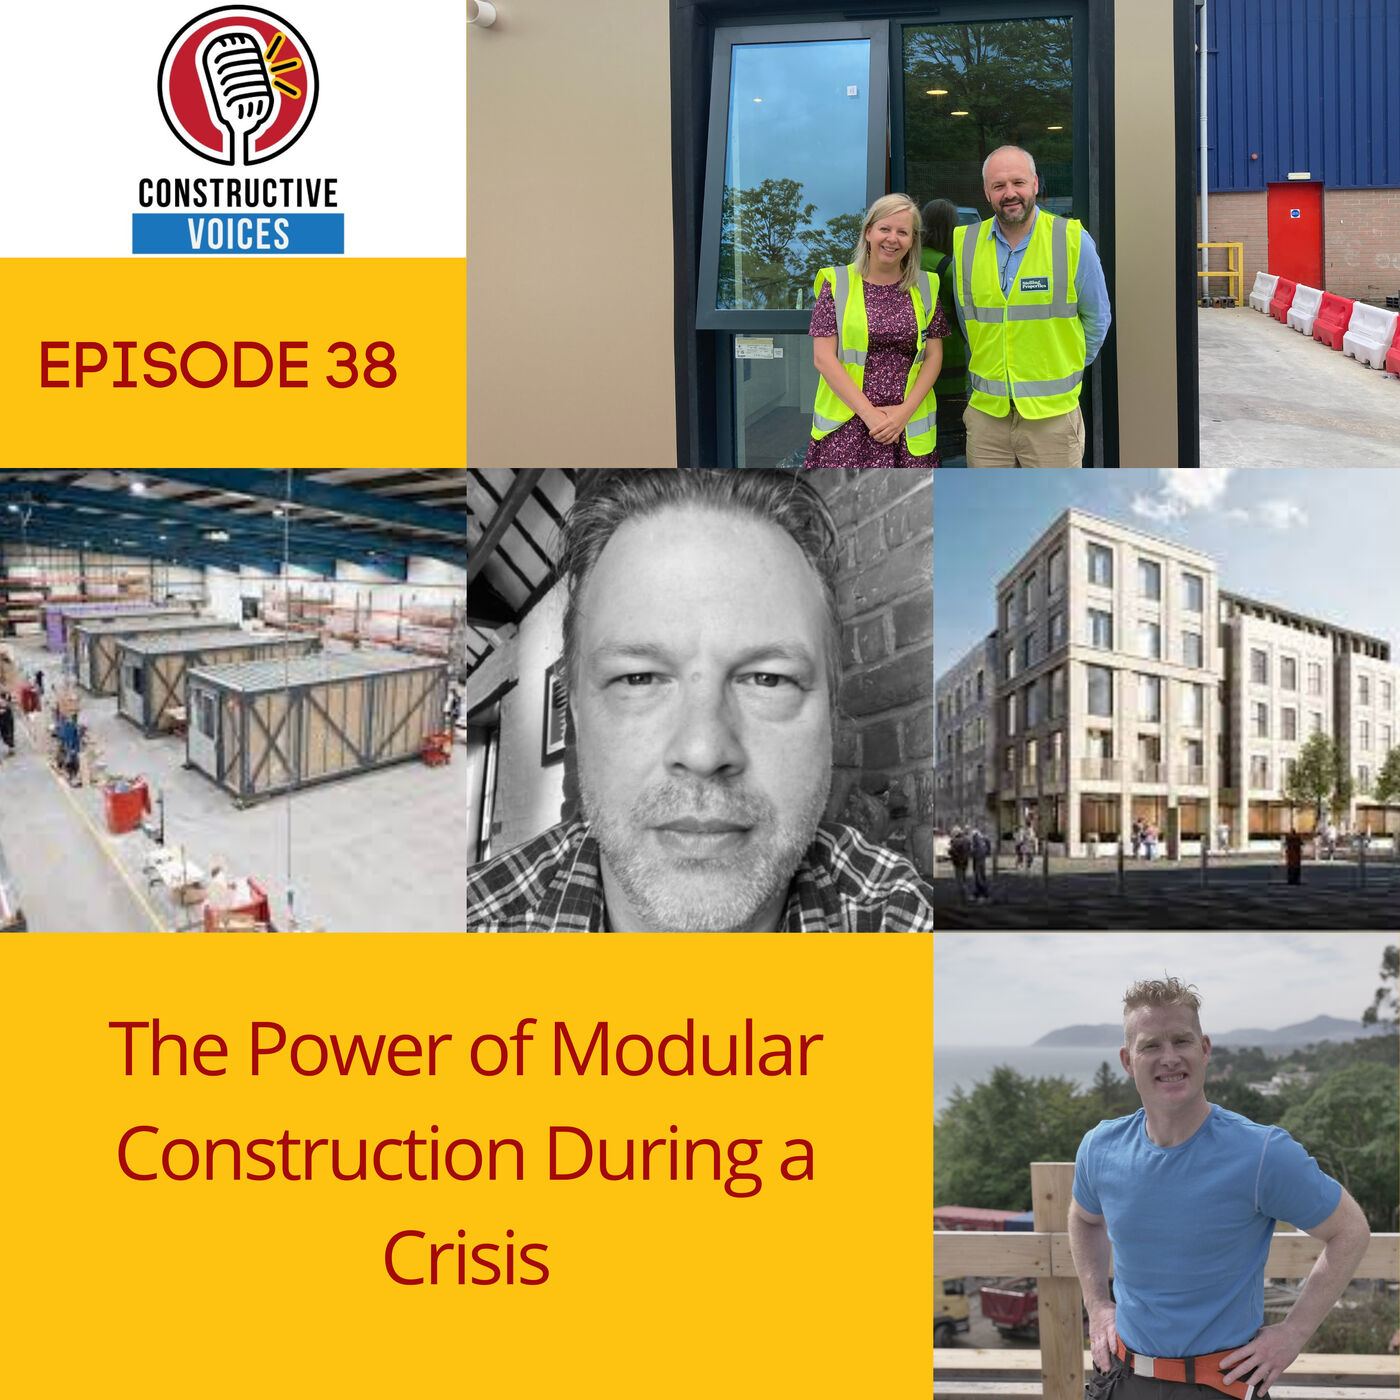 The Power of Modular Construction During a Crisis